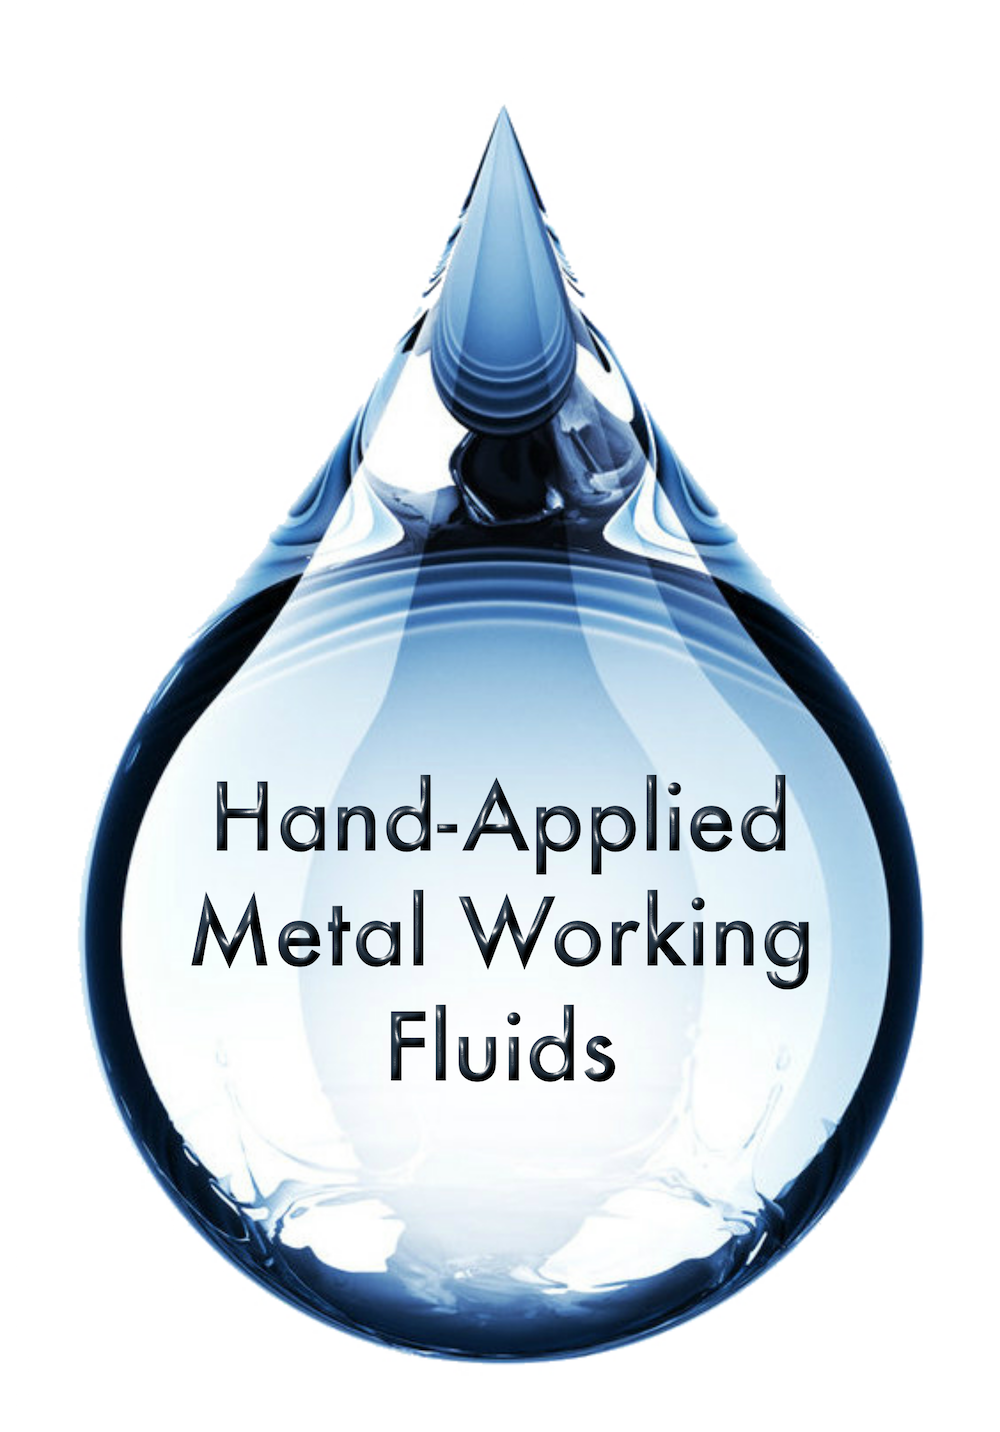 Hand-Applied Metal Working Fluids